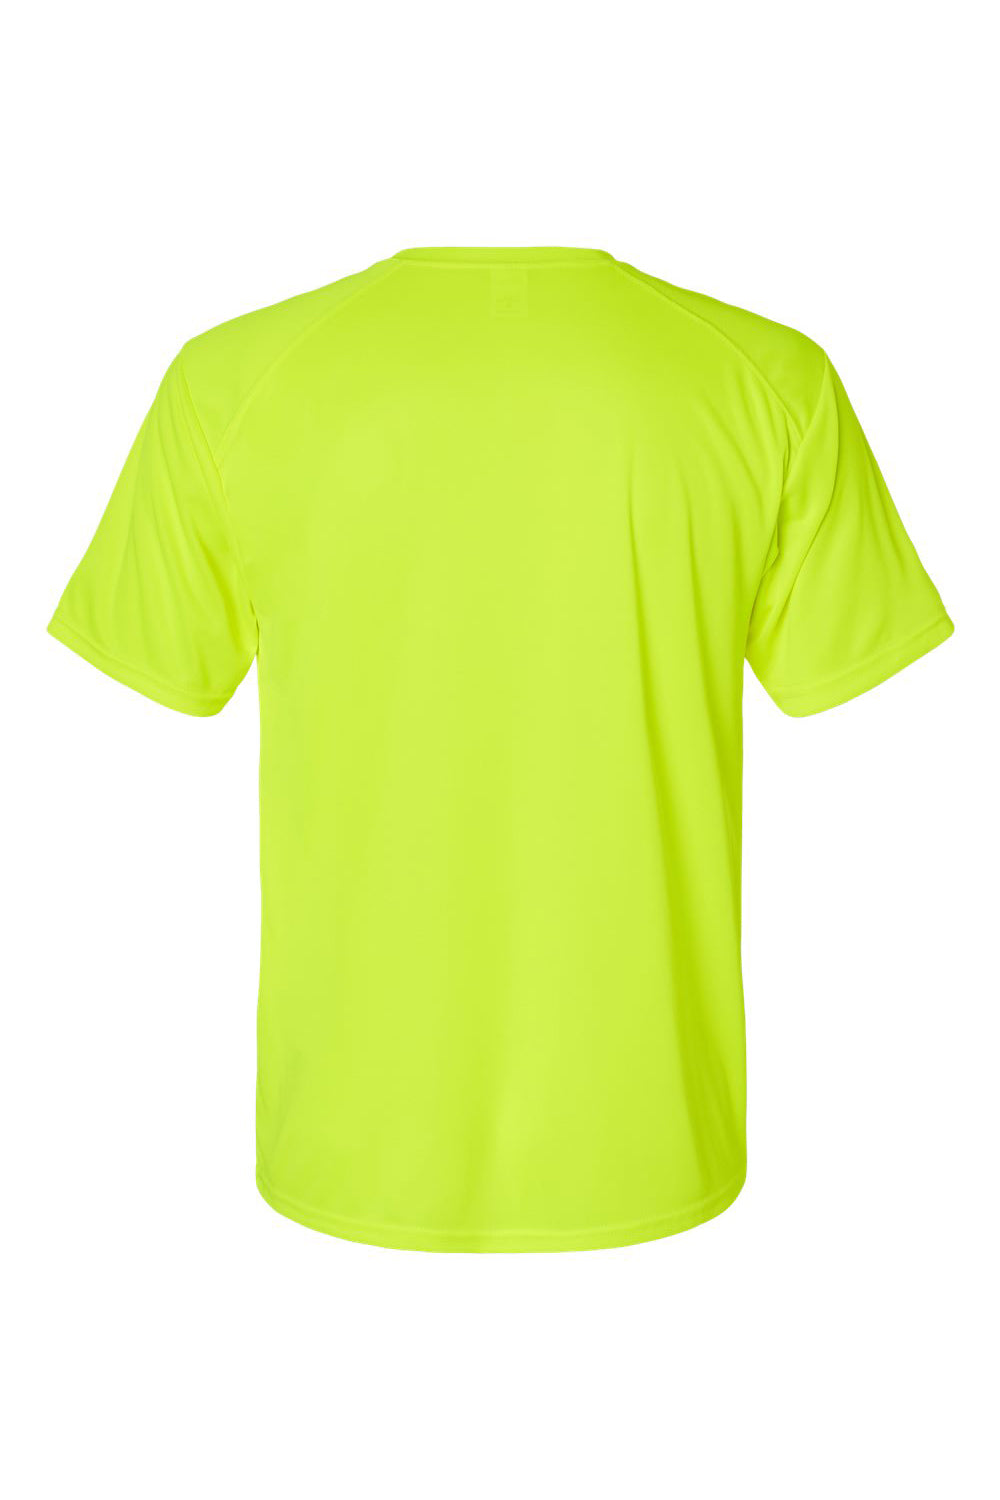 Paragon 200 Mens Islander Performance Short Sleeve Crewneck T-Shirt Safety Green Flat Back